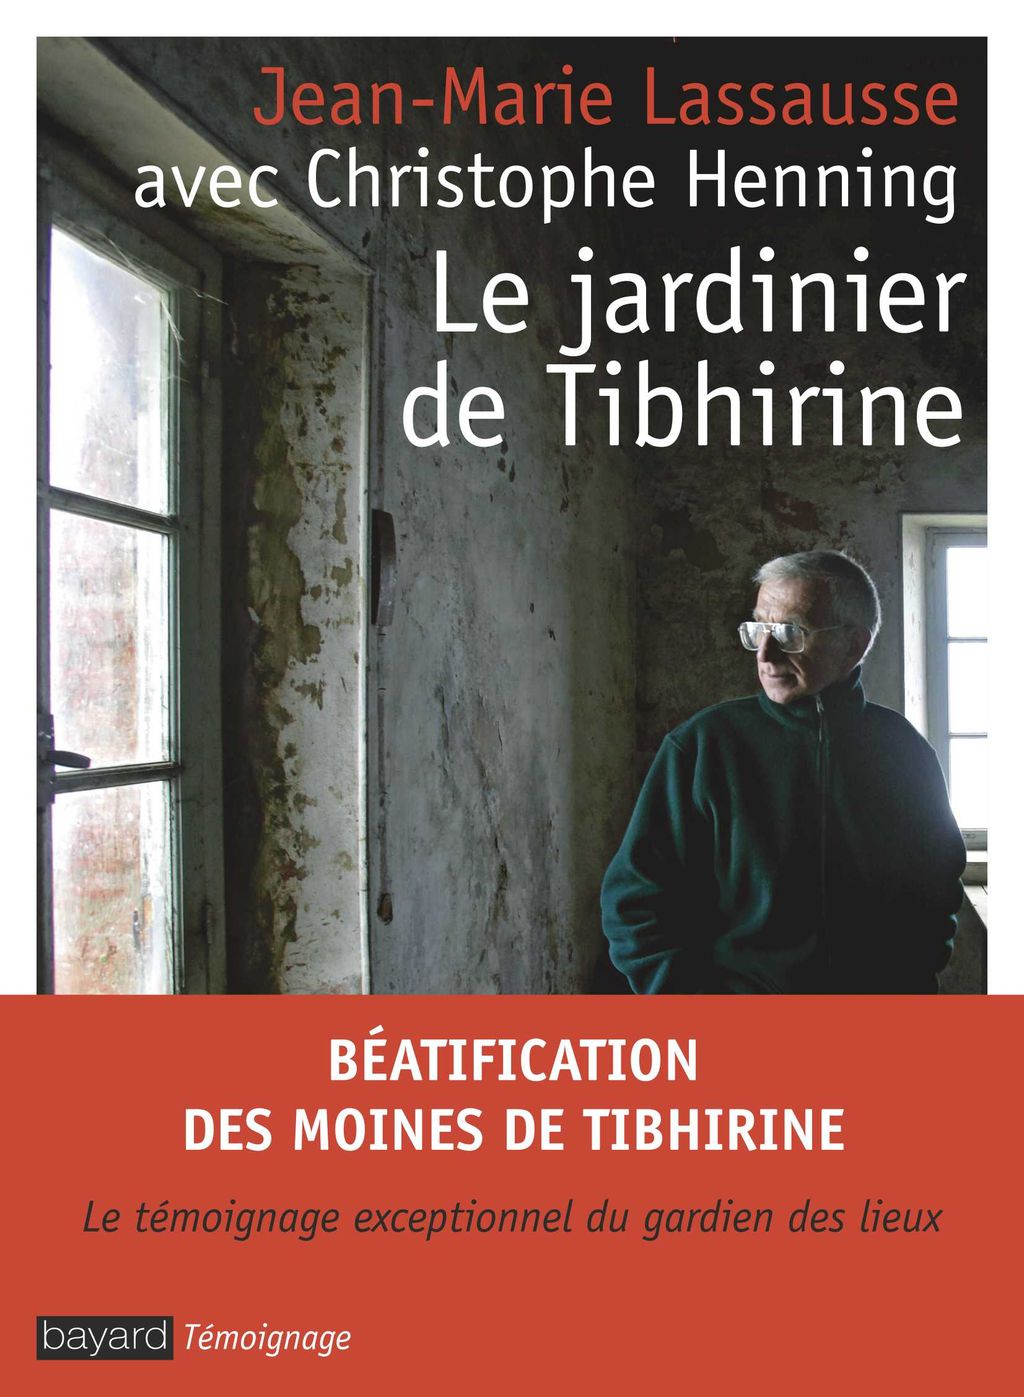 « Le jardinier de Tibhirine » cover